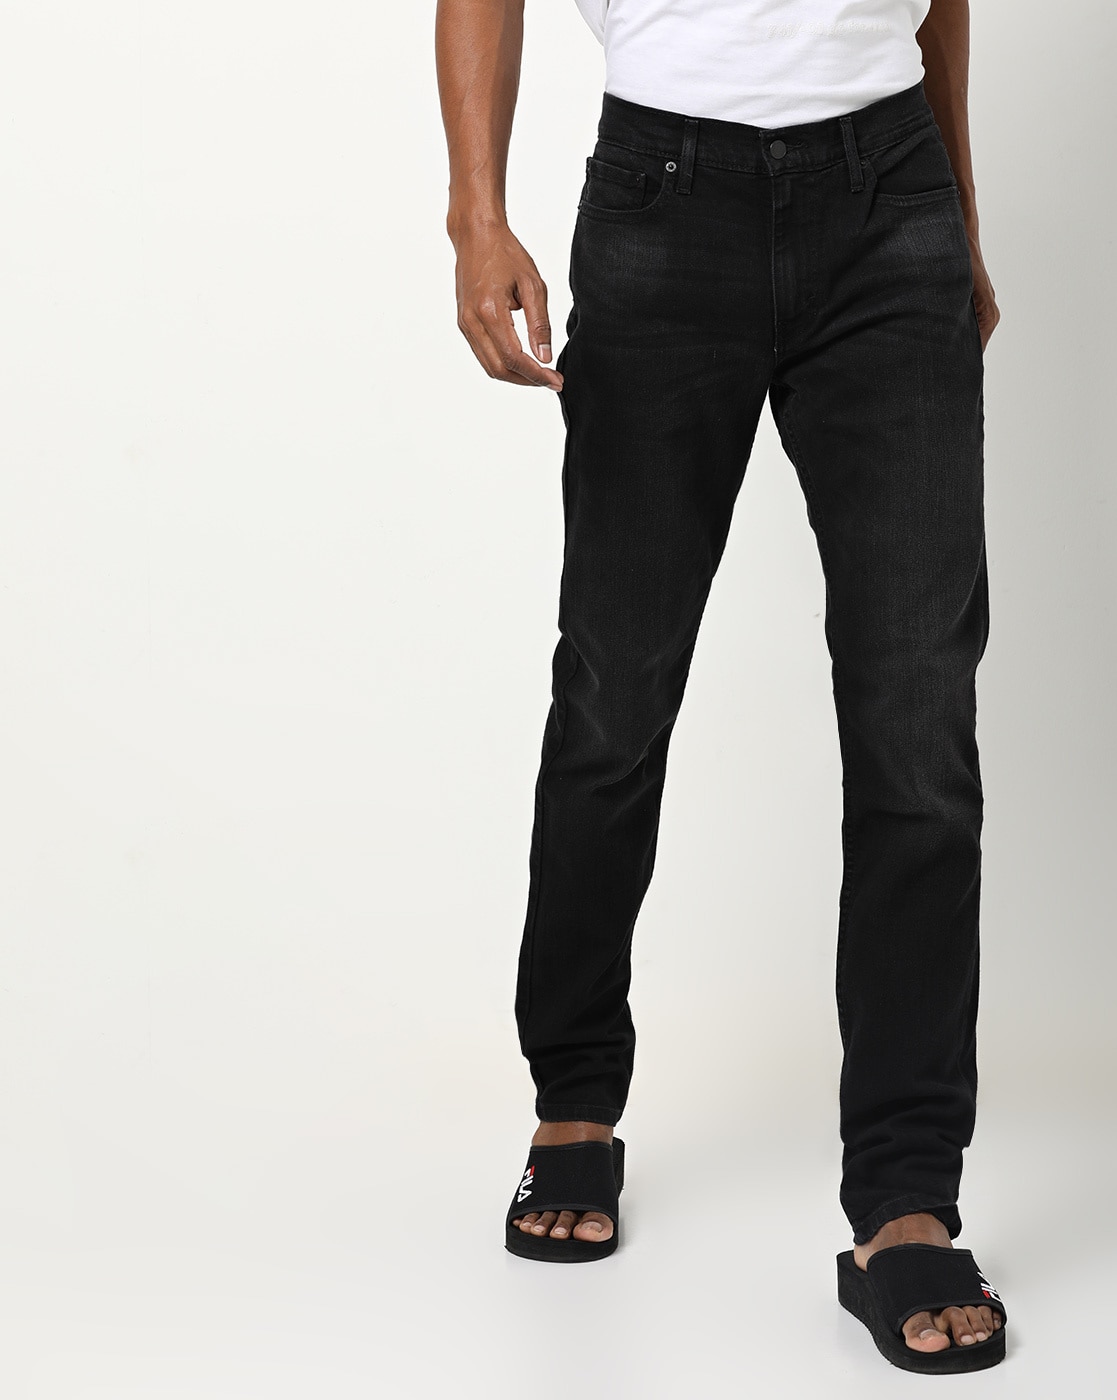 levis black jeans price